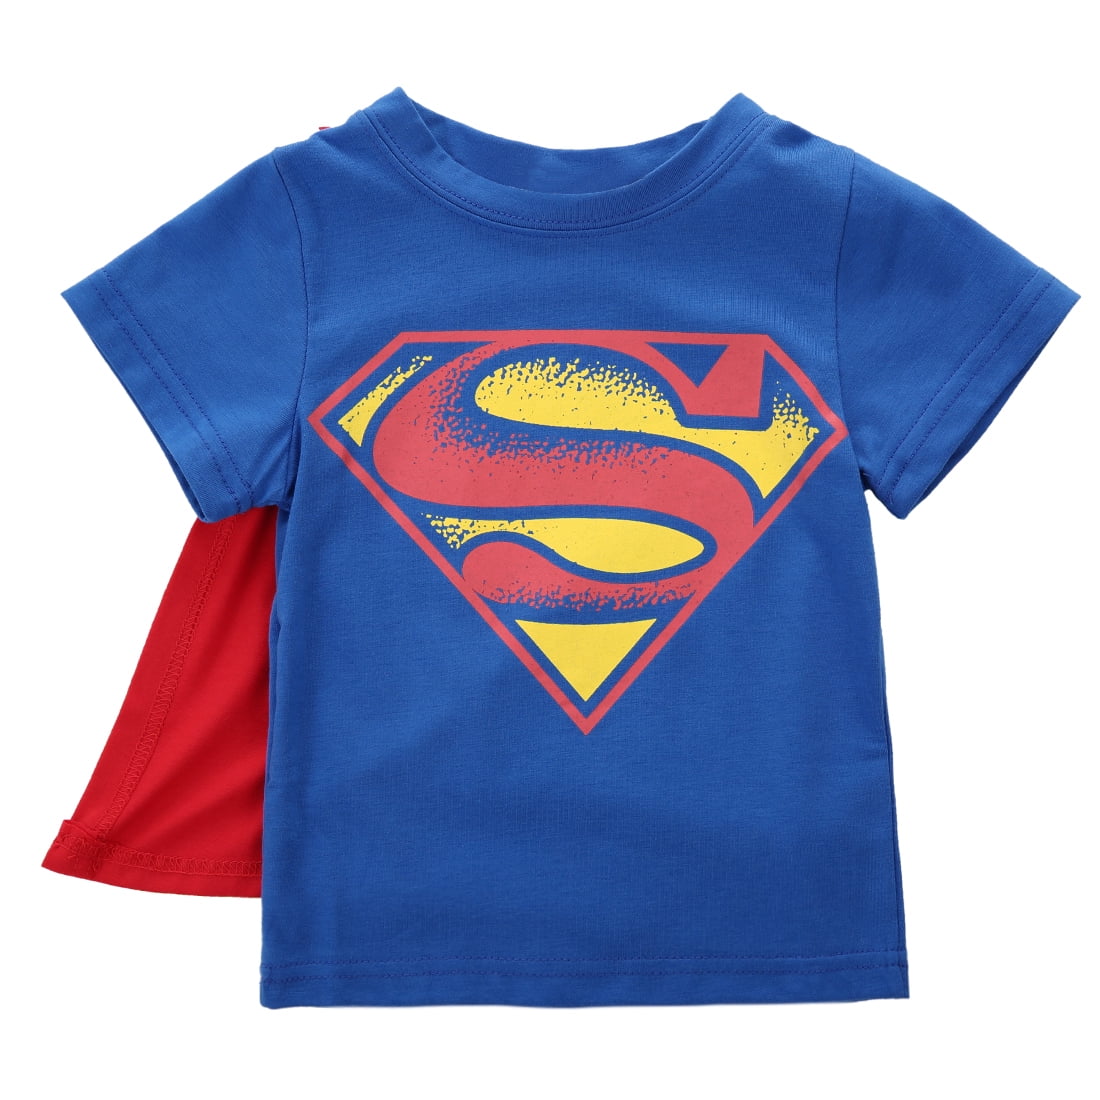 Toddler Baby Boys Superman Batman Shirt Short Sleeves T-Shirt Summer Clothes Walmart.com